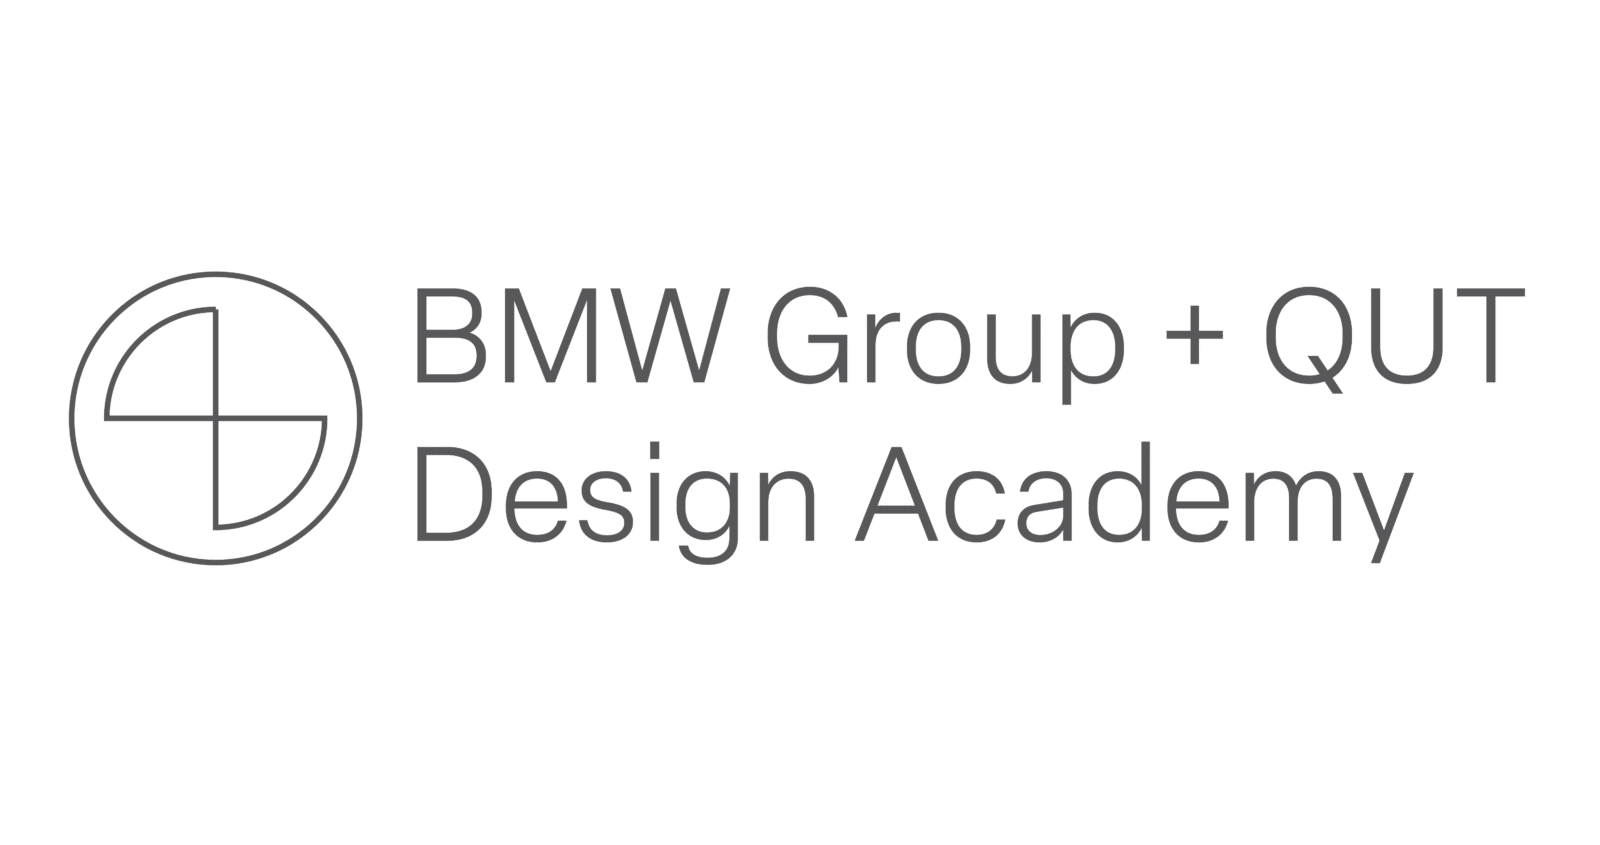 BMW group + QUT design academy 